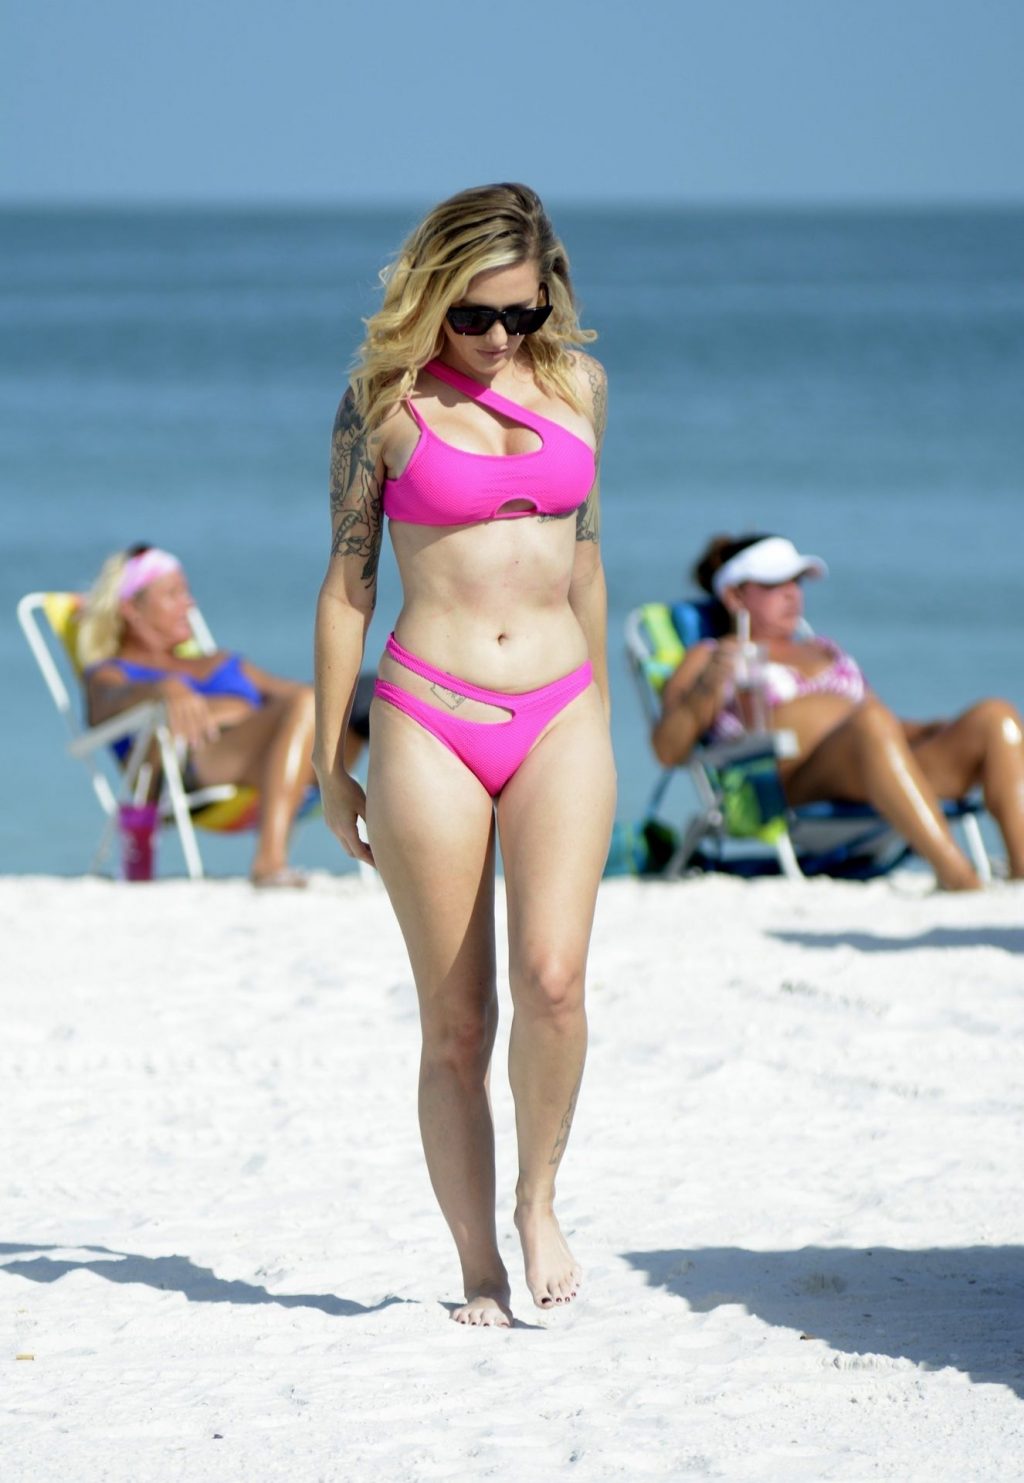 Reagan Lush Hits the Beach in Florida (25 Photos)